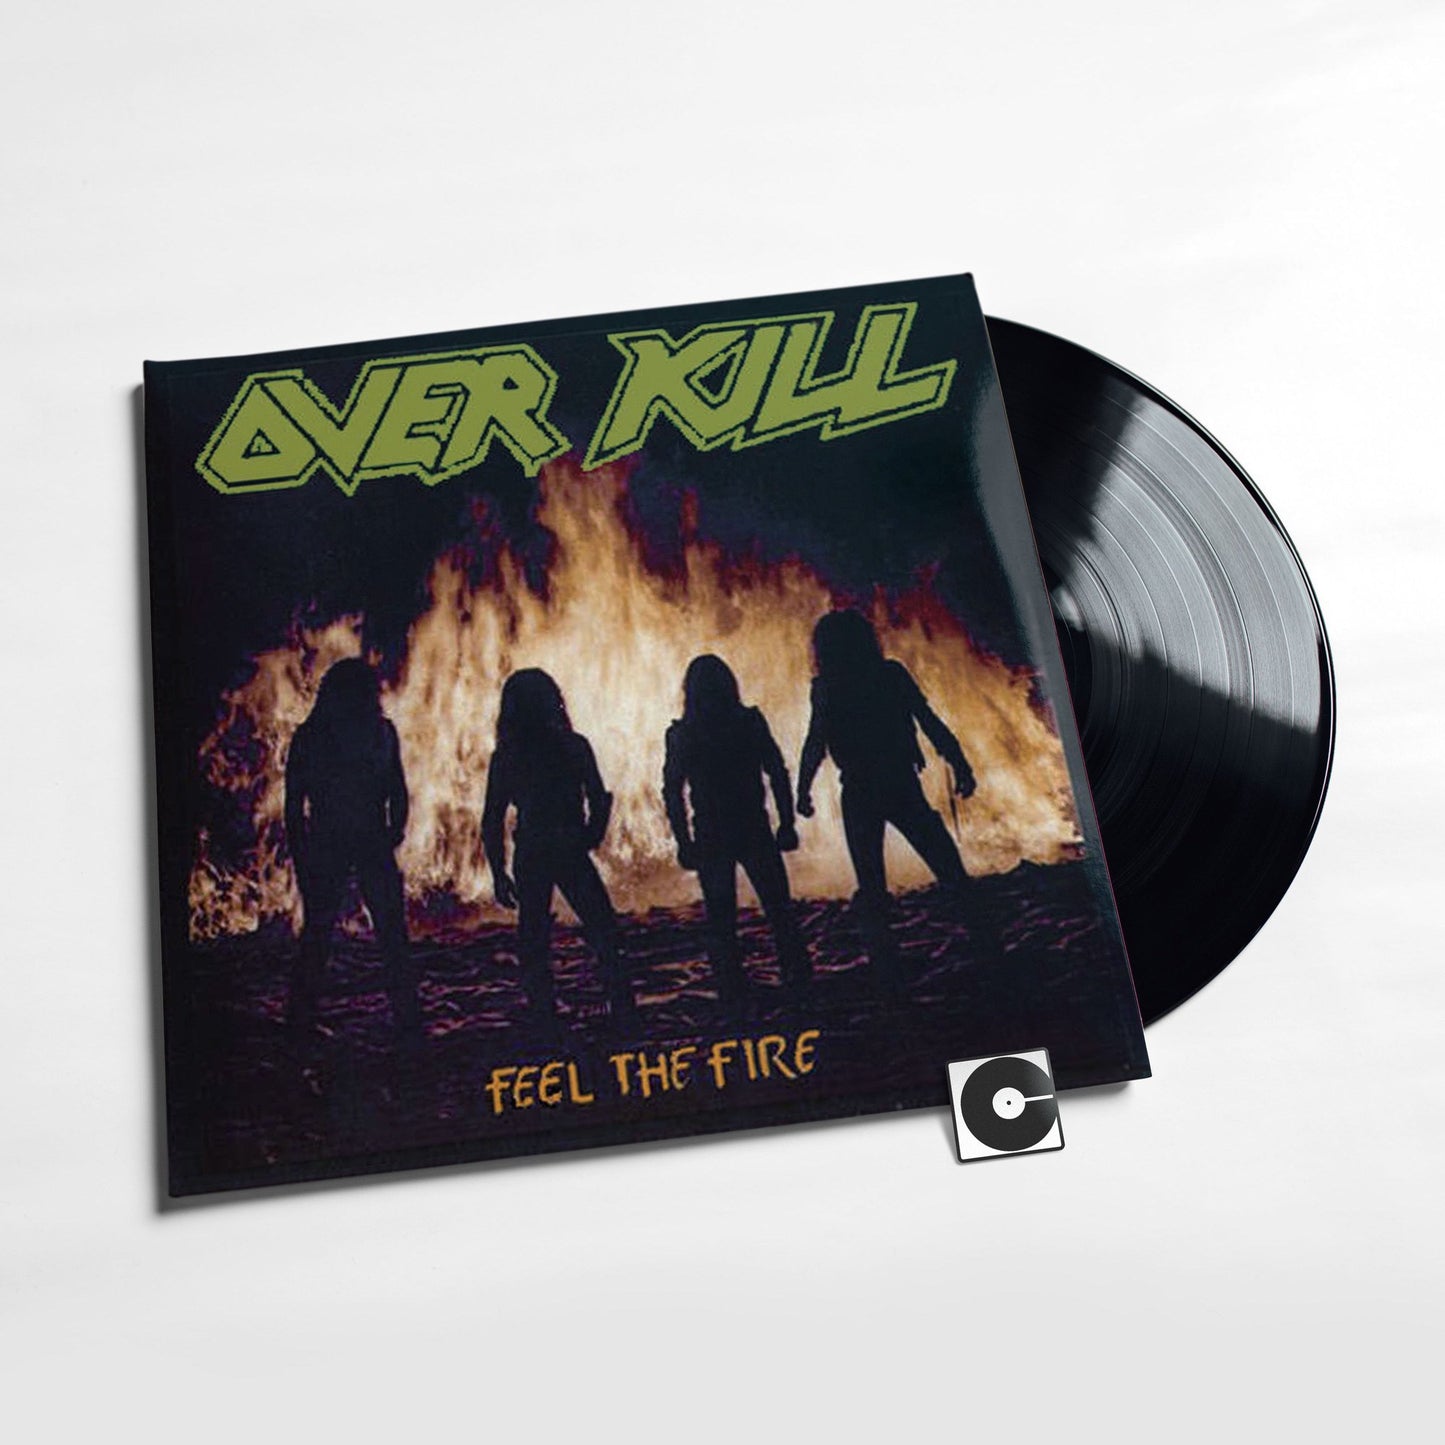 Overkill - "Feel The Fire"